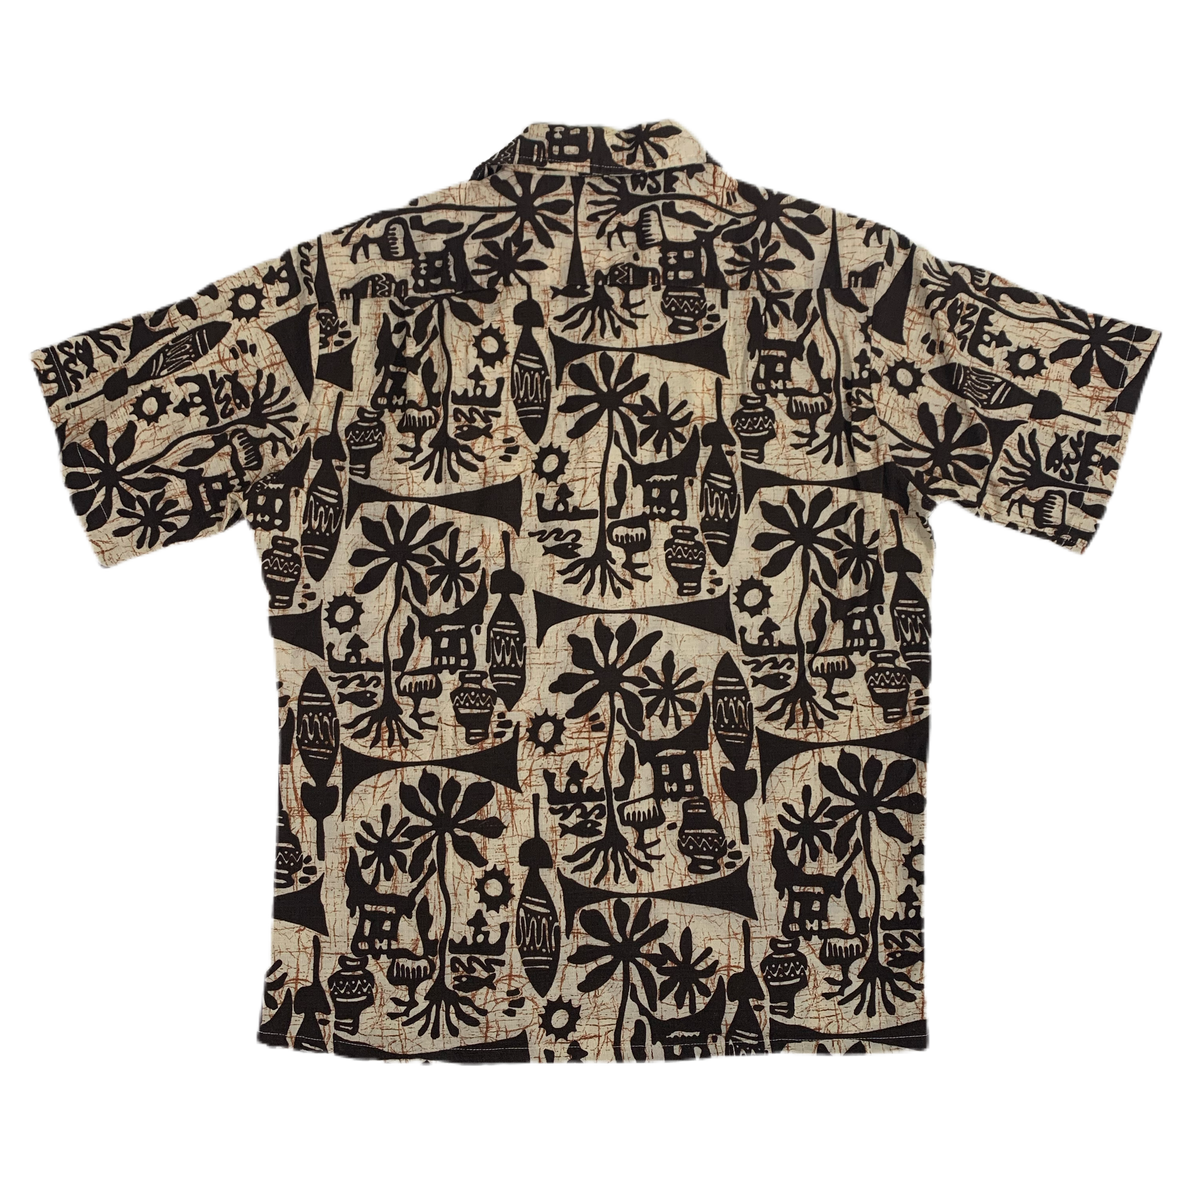 Vintage Florida Sunwear “Open Collar” Hawaiian Shirt - jointcustodydc